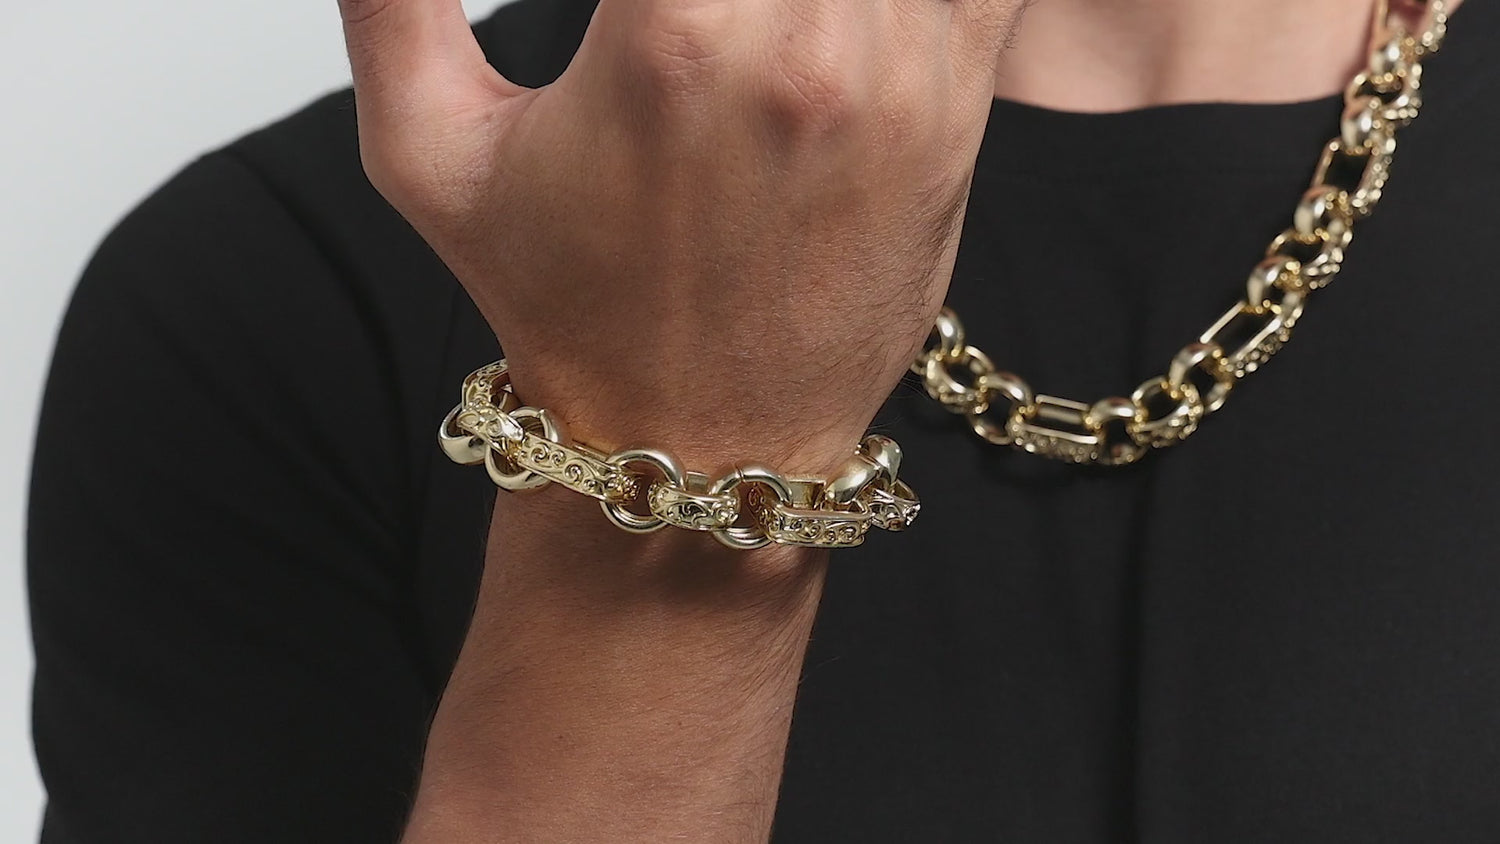 Bling King London, Gold Chains, Gold Bracelets